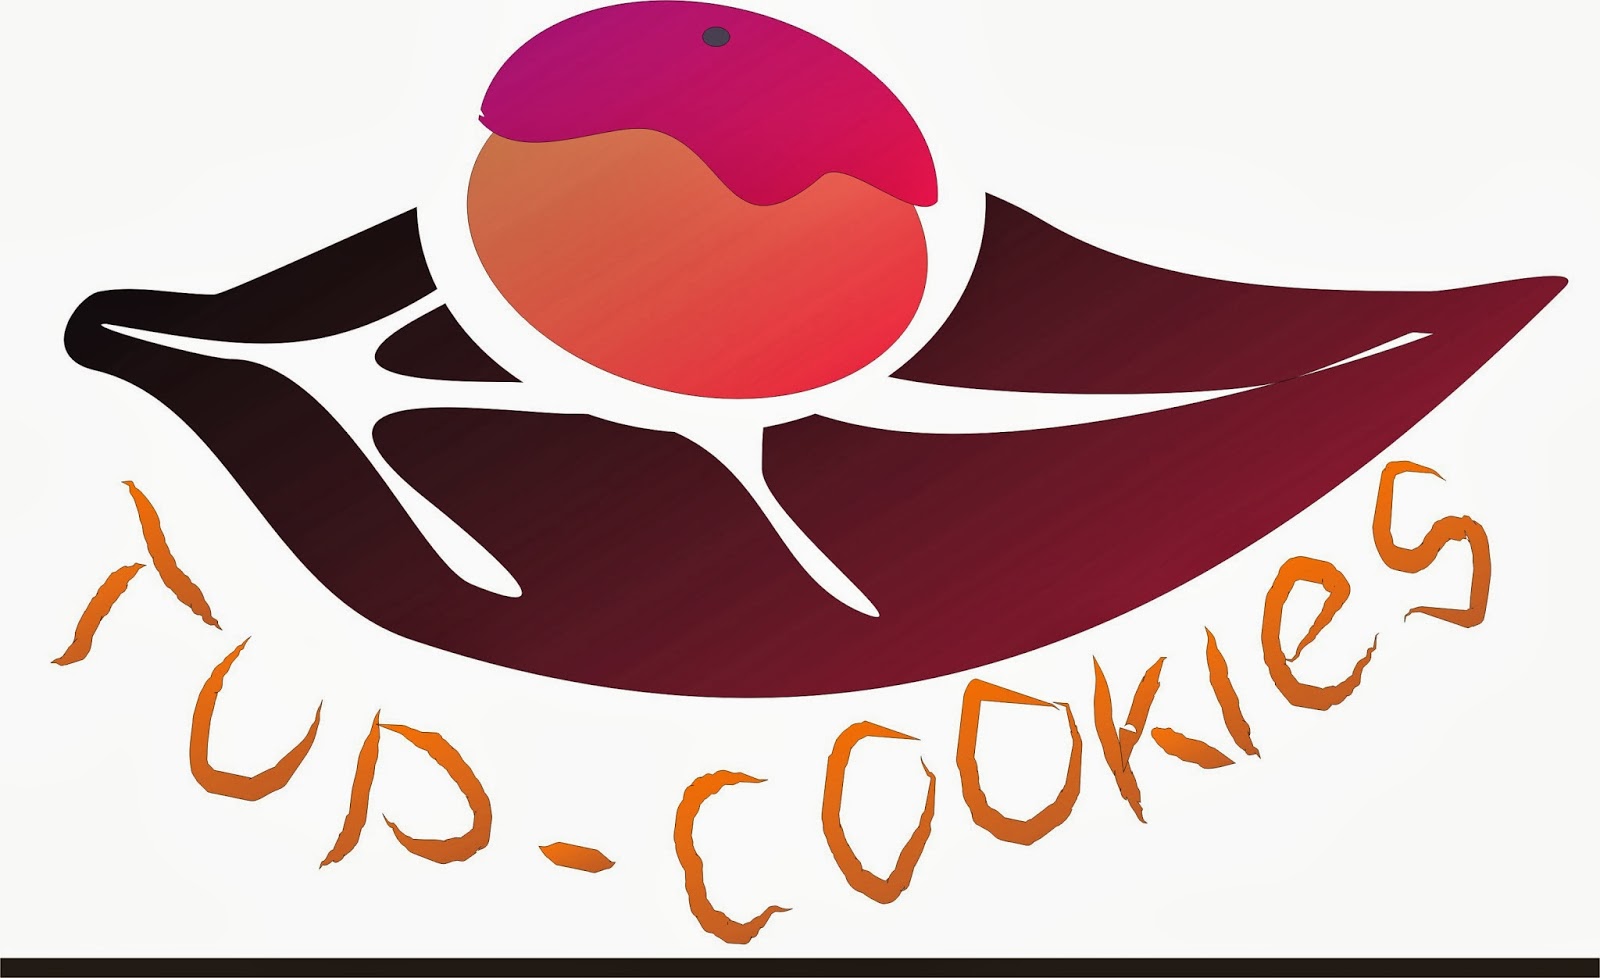 Download Contoh Logo Toko Kue Ariel Mukti